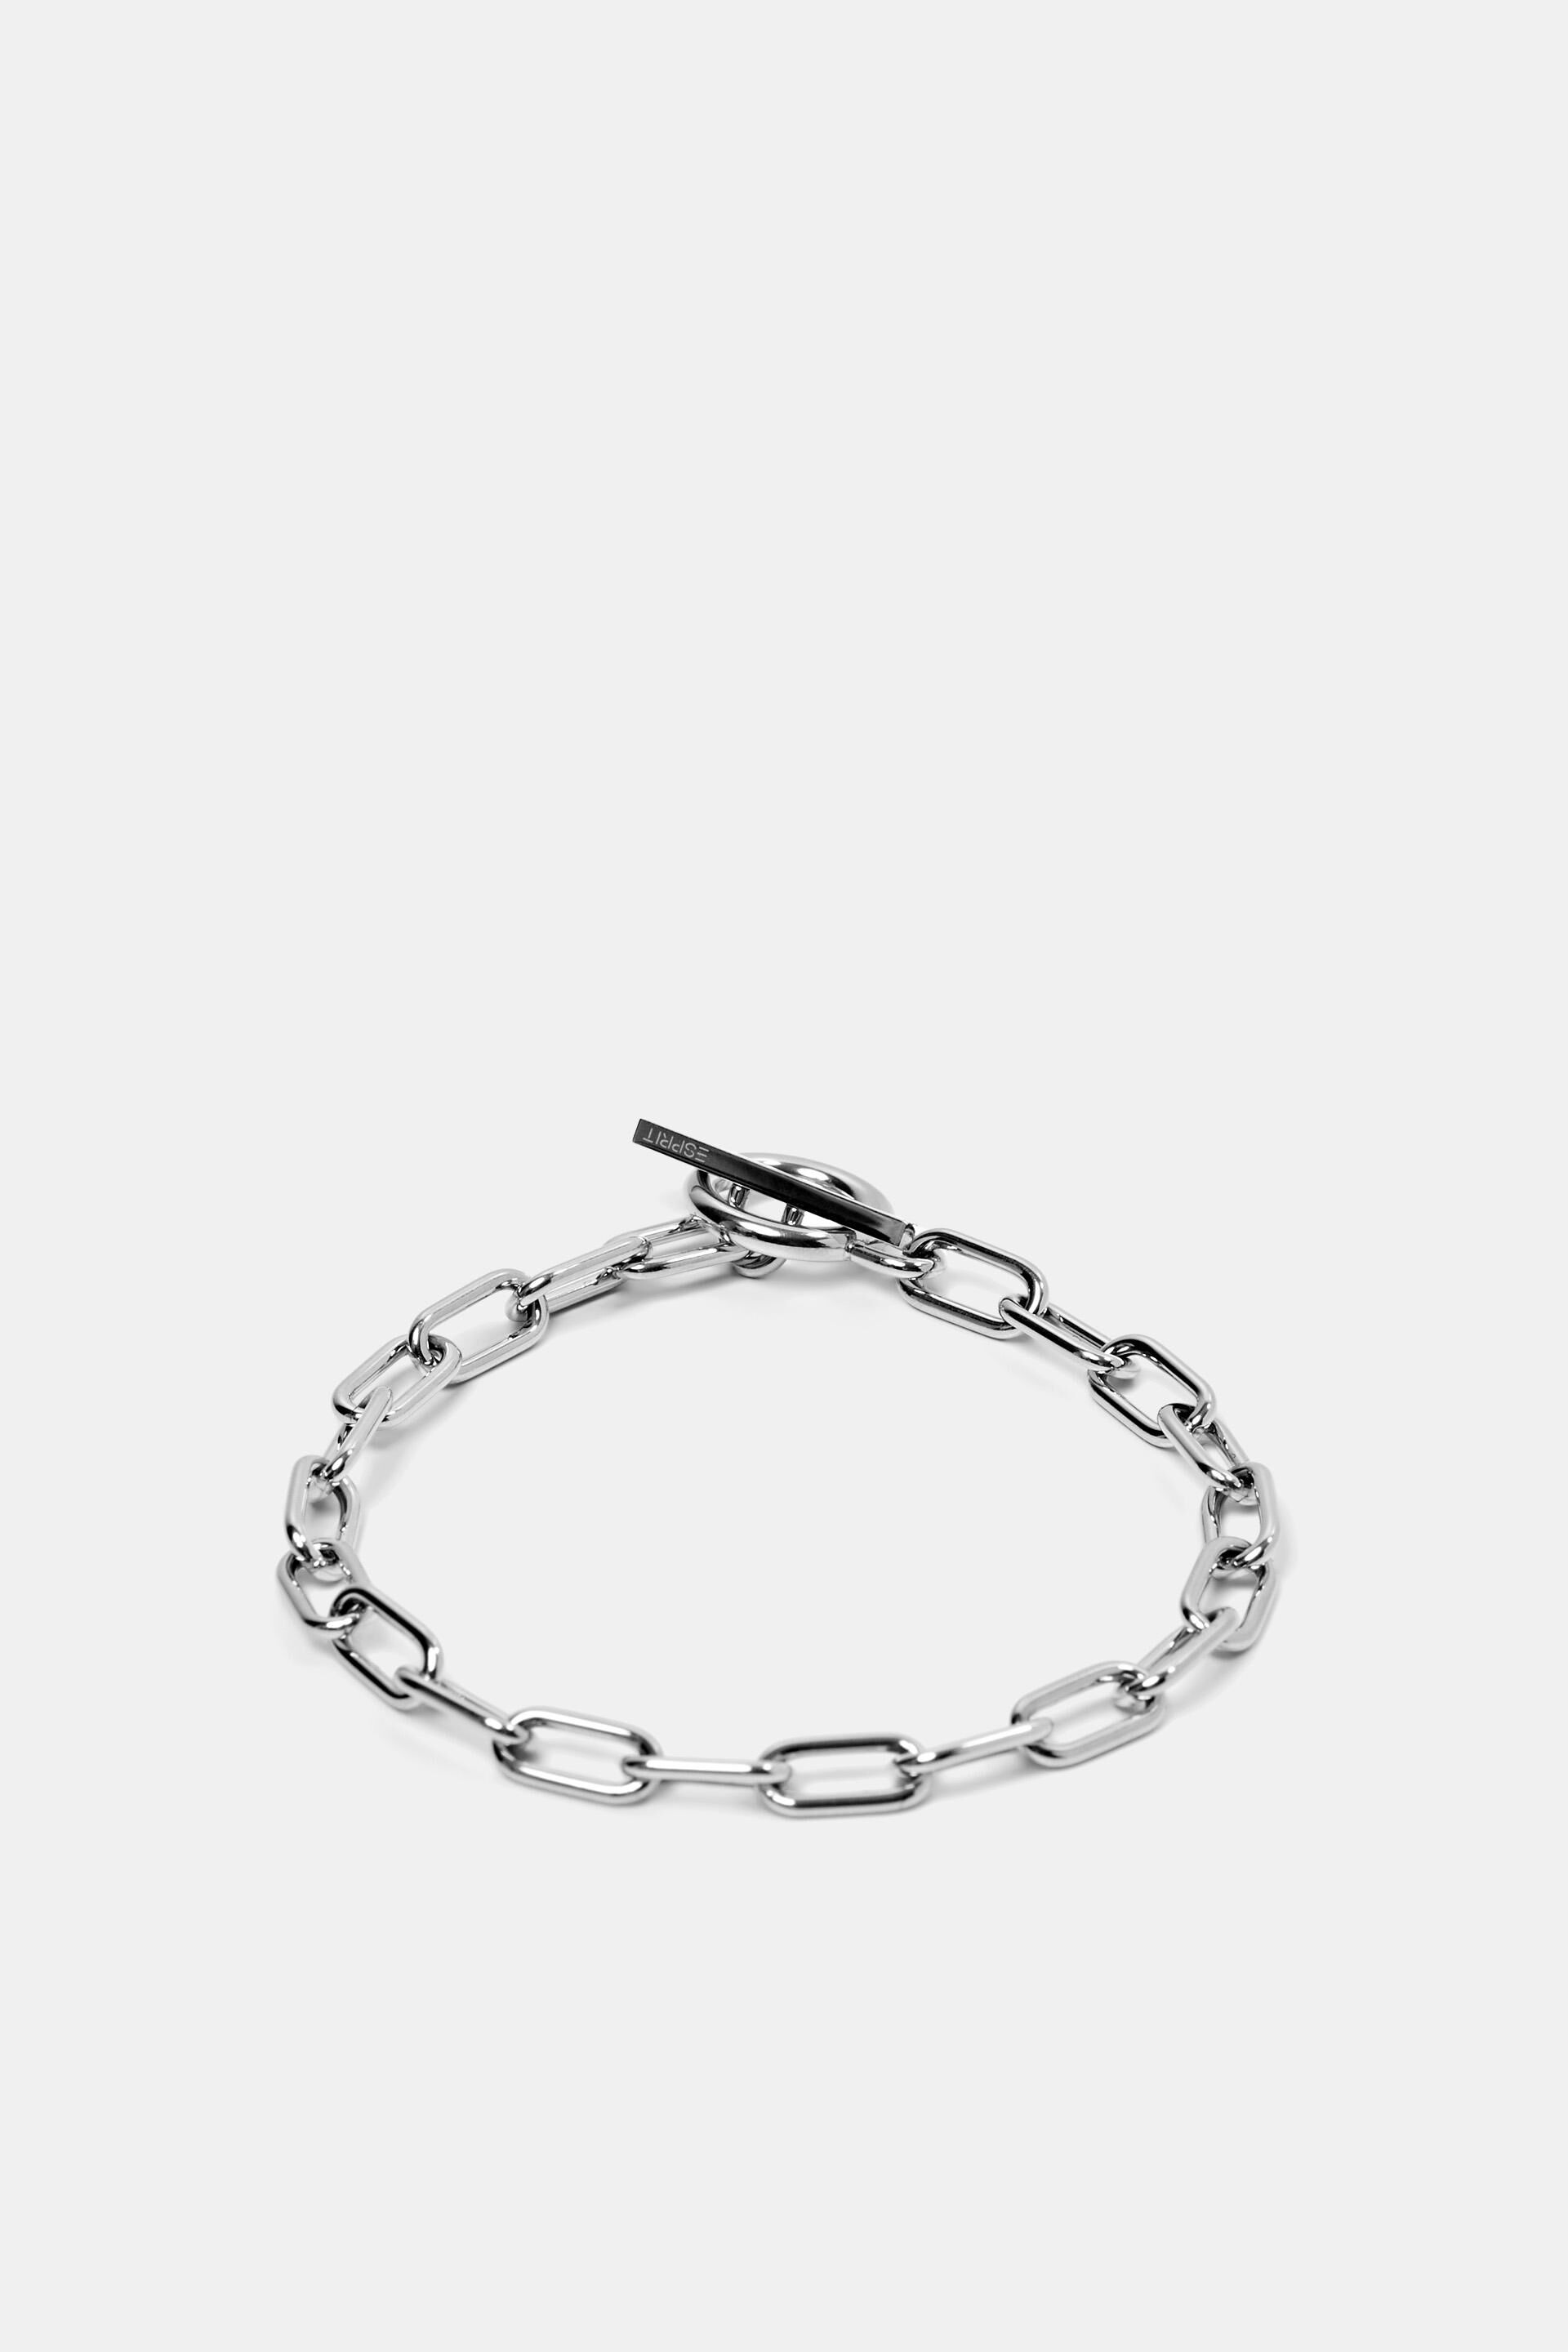 Esprit Chain stainless steel bracelet,